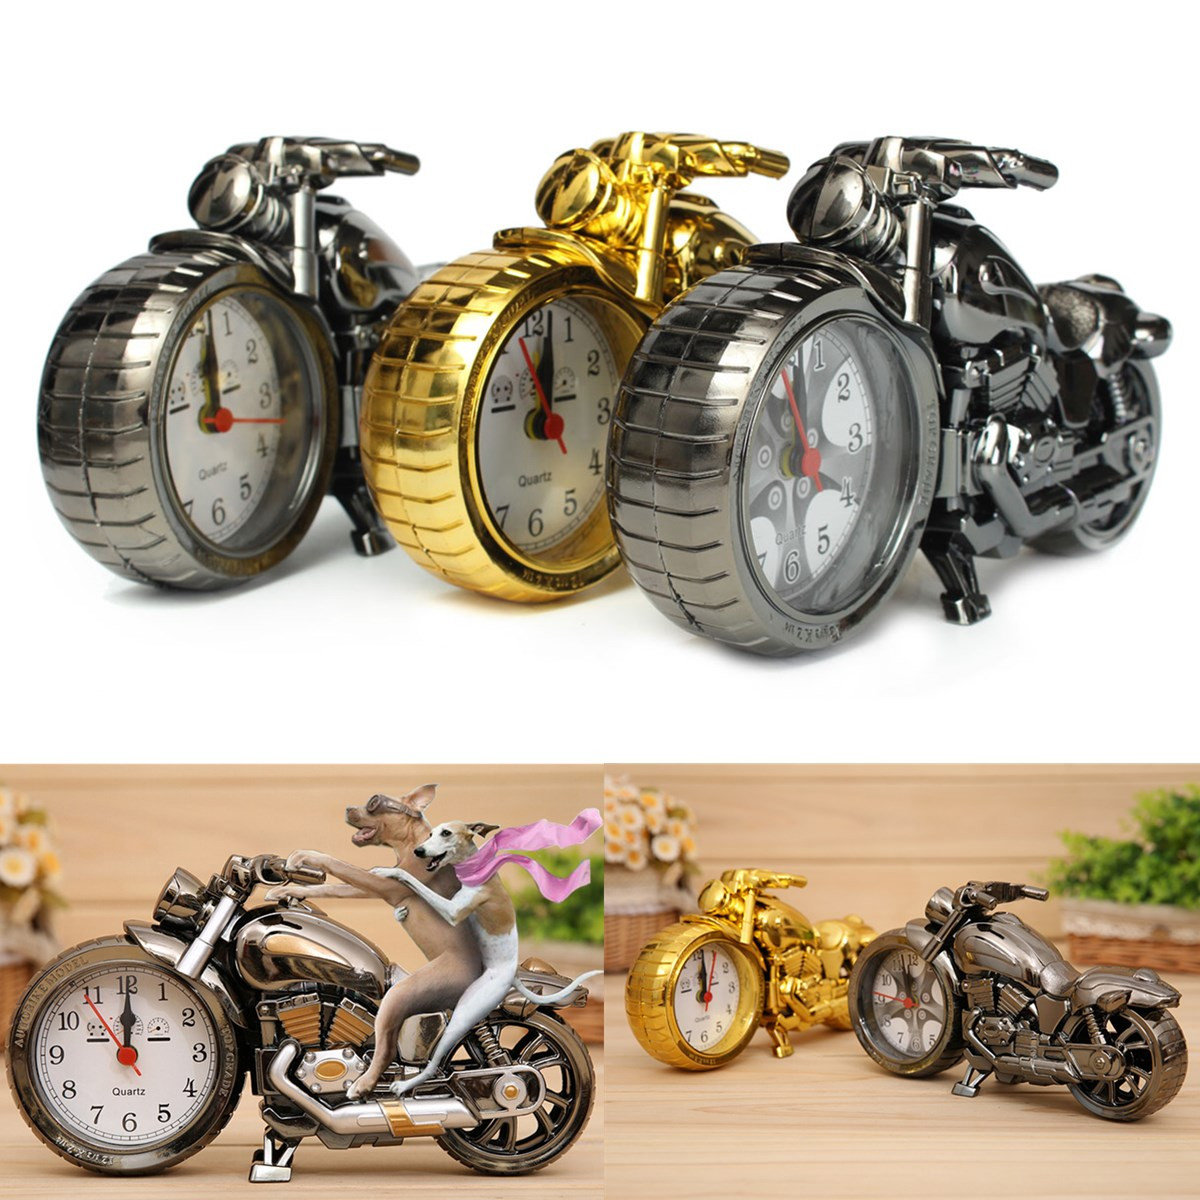 

Creative Motorbike Shape Alarm Clock Novel Desk Clock Festival Gift, Black multi-color gold